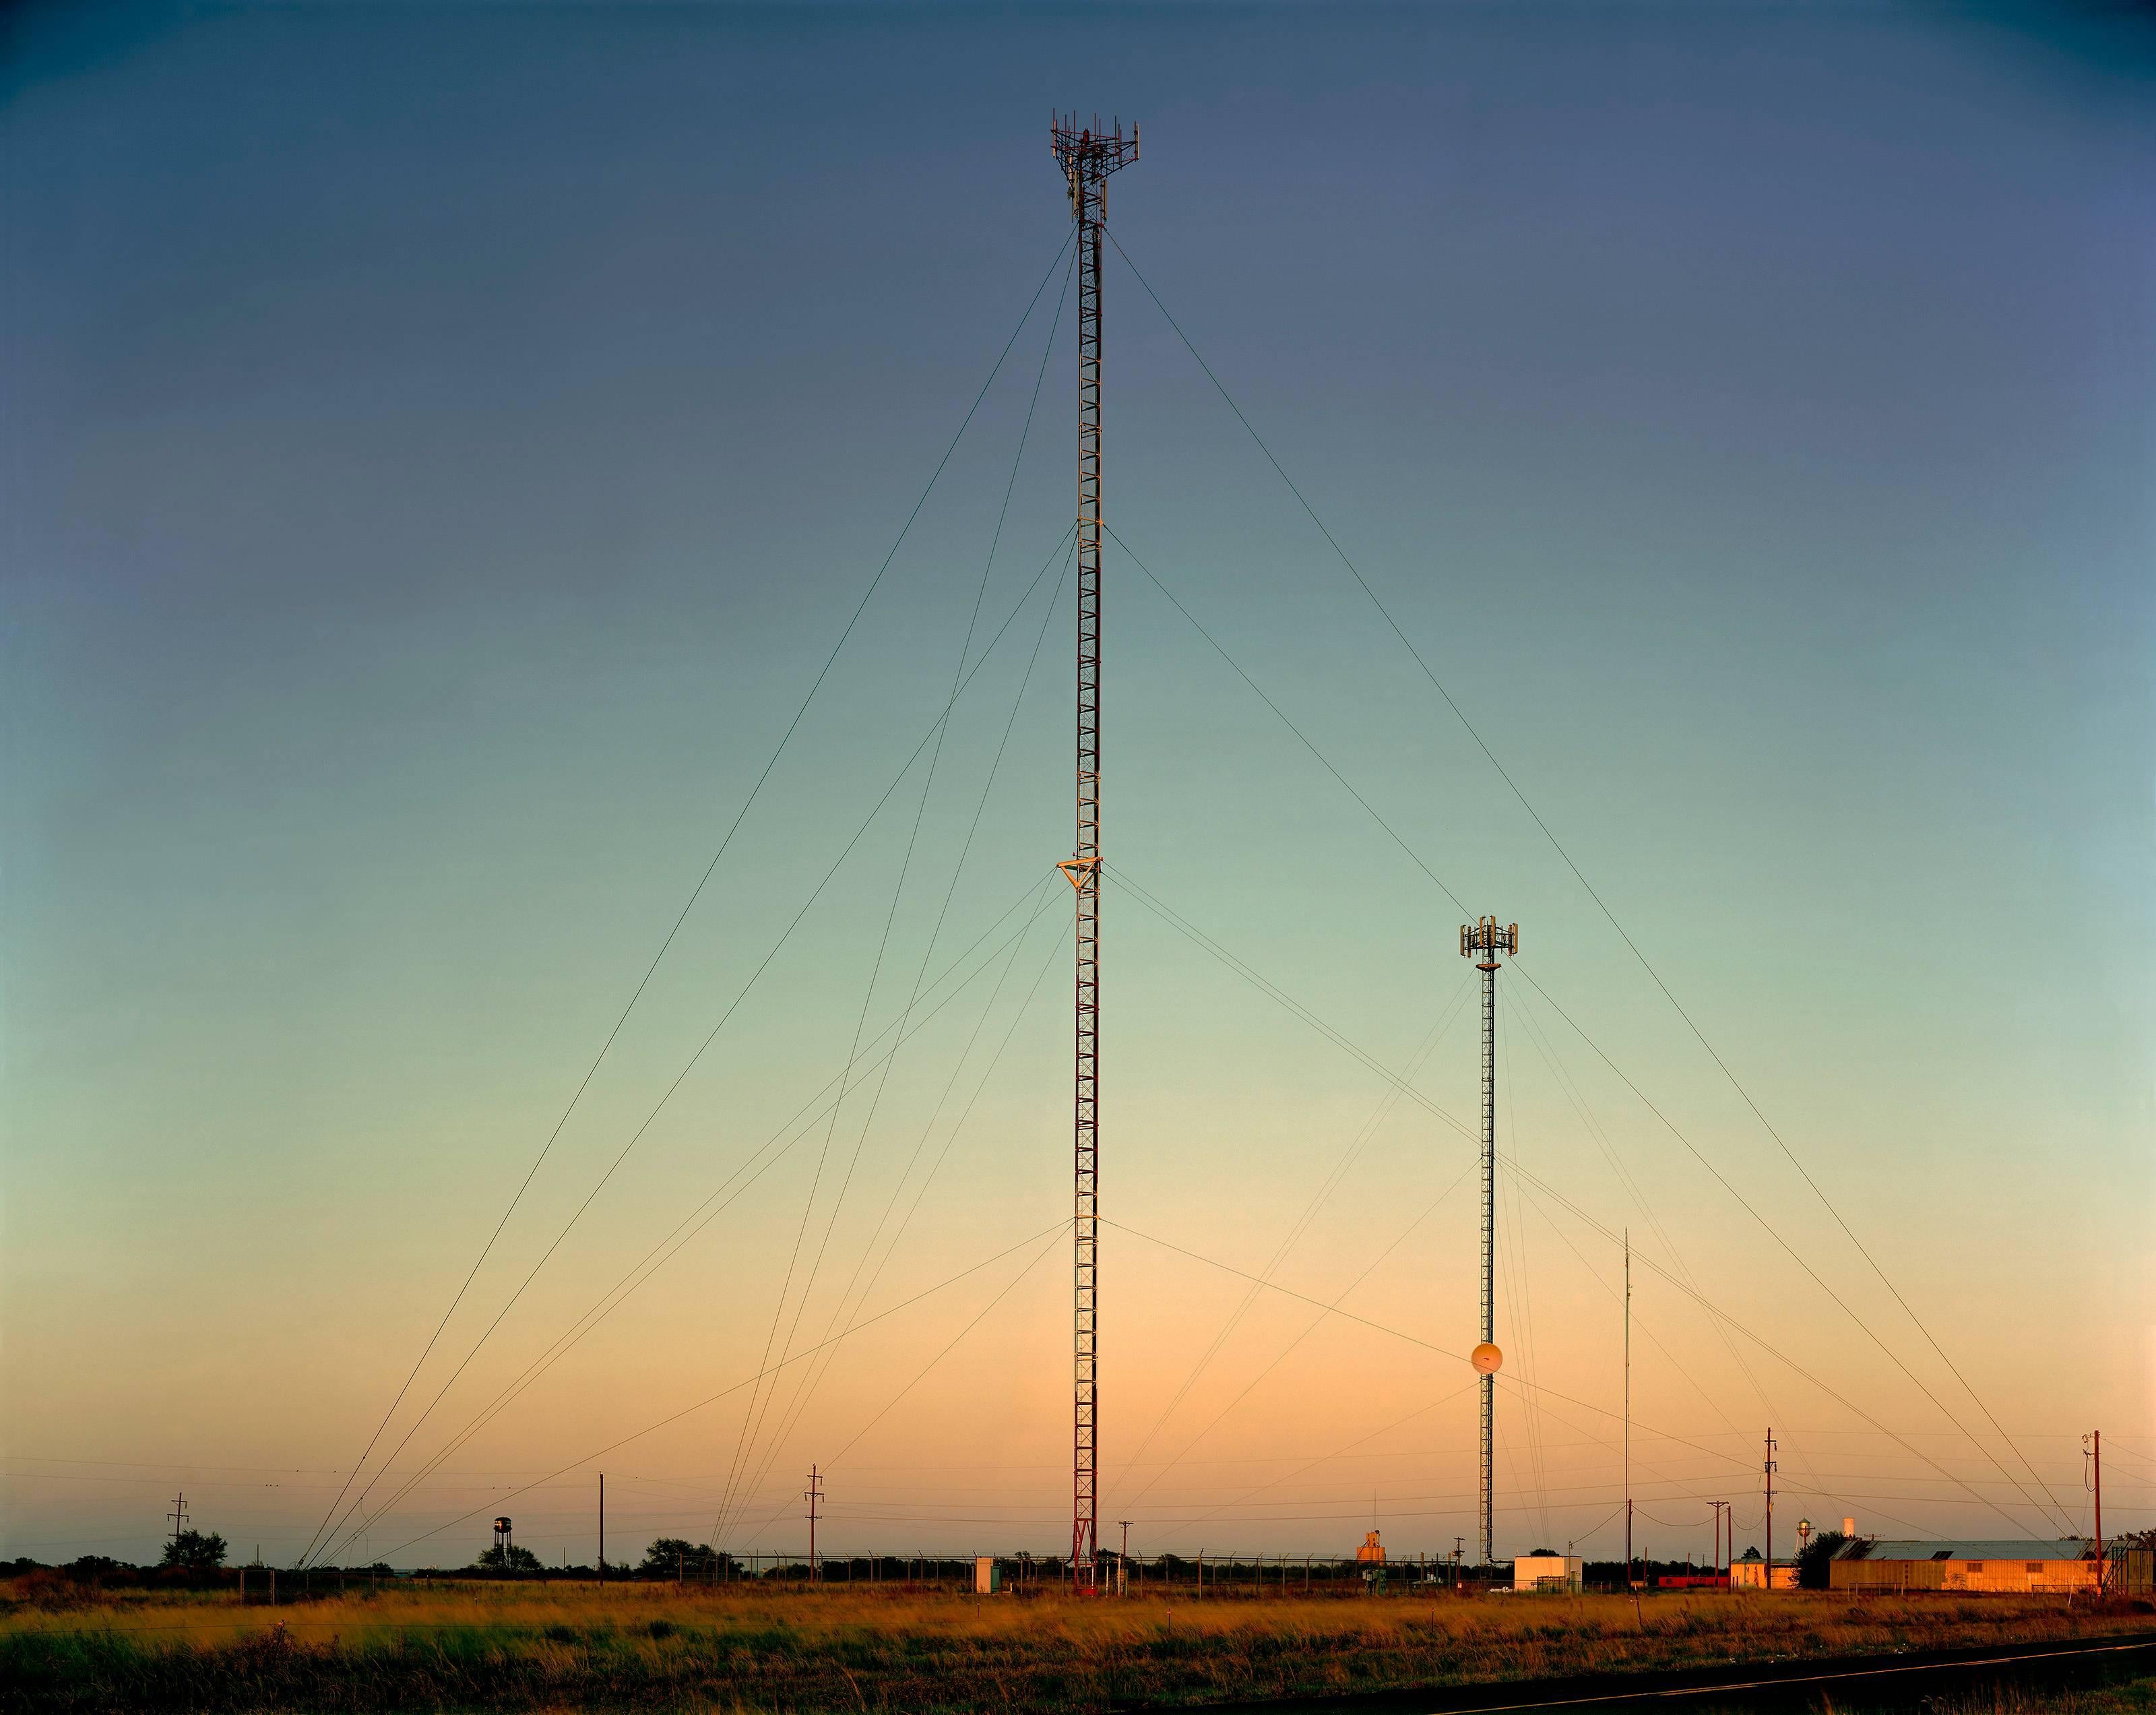 Steve Fitch Color Photograph - Radio Tower near Sudan, Texas; October 18, 2010